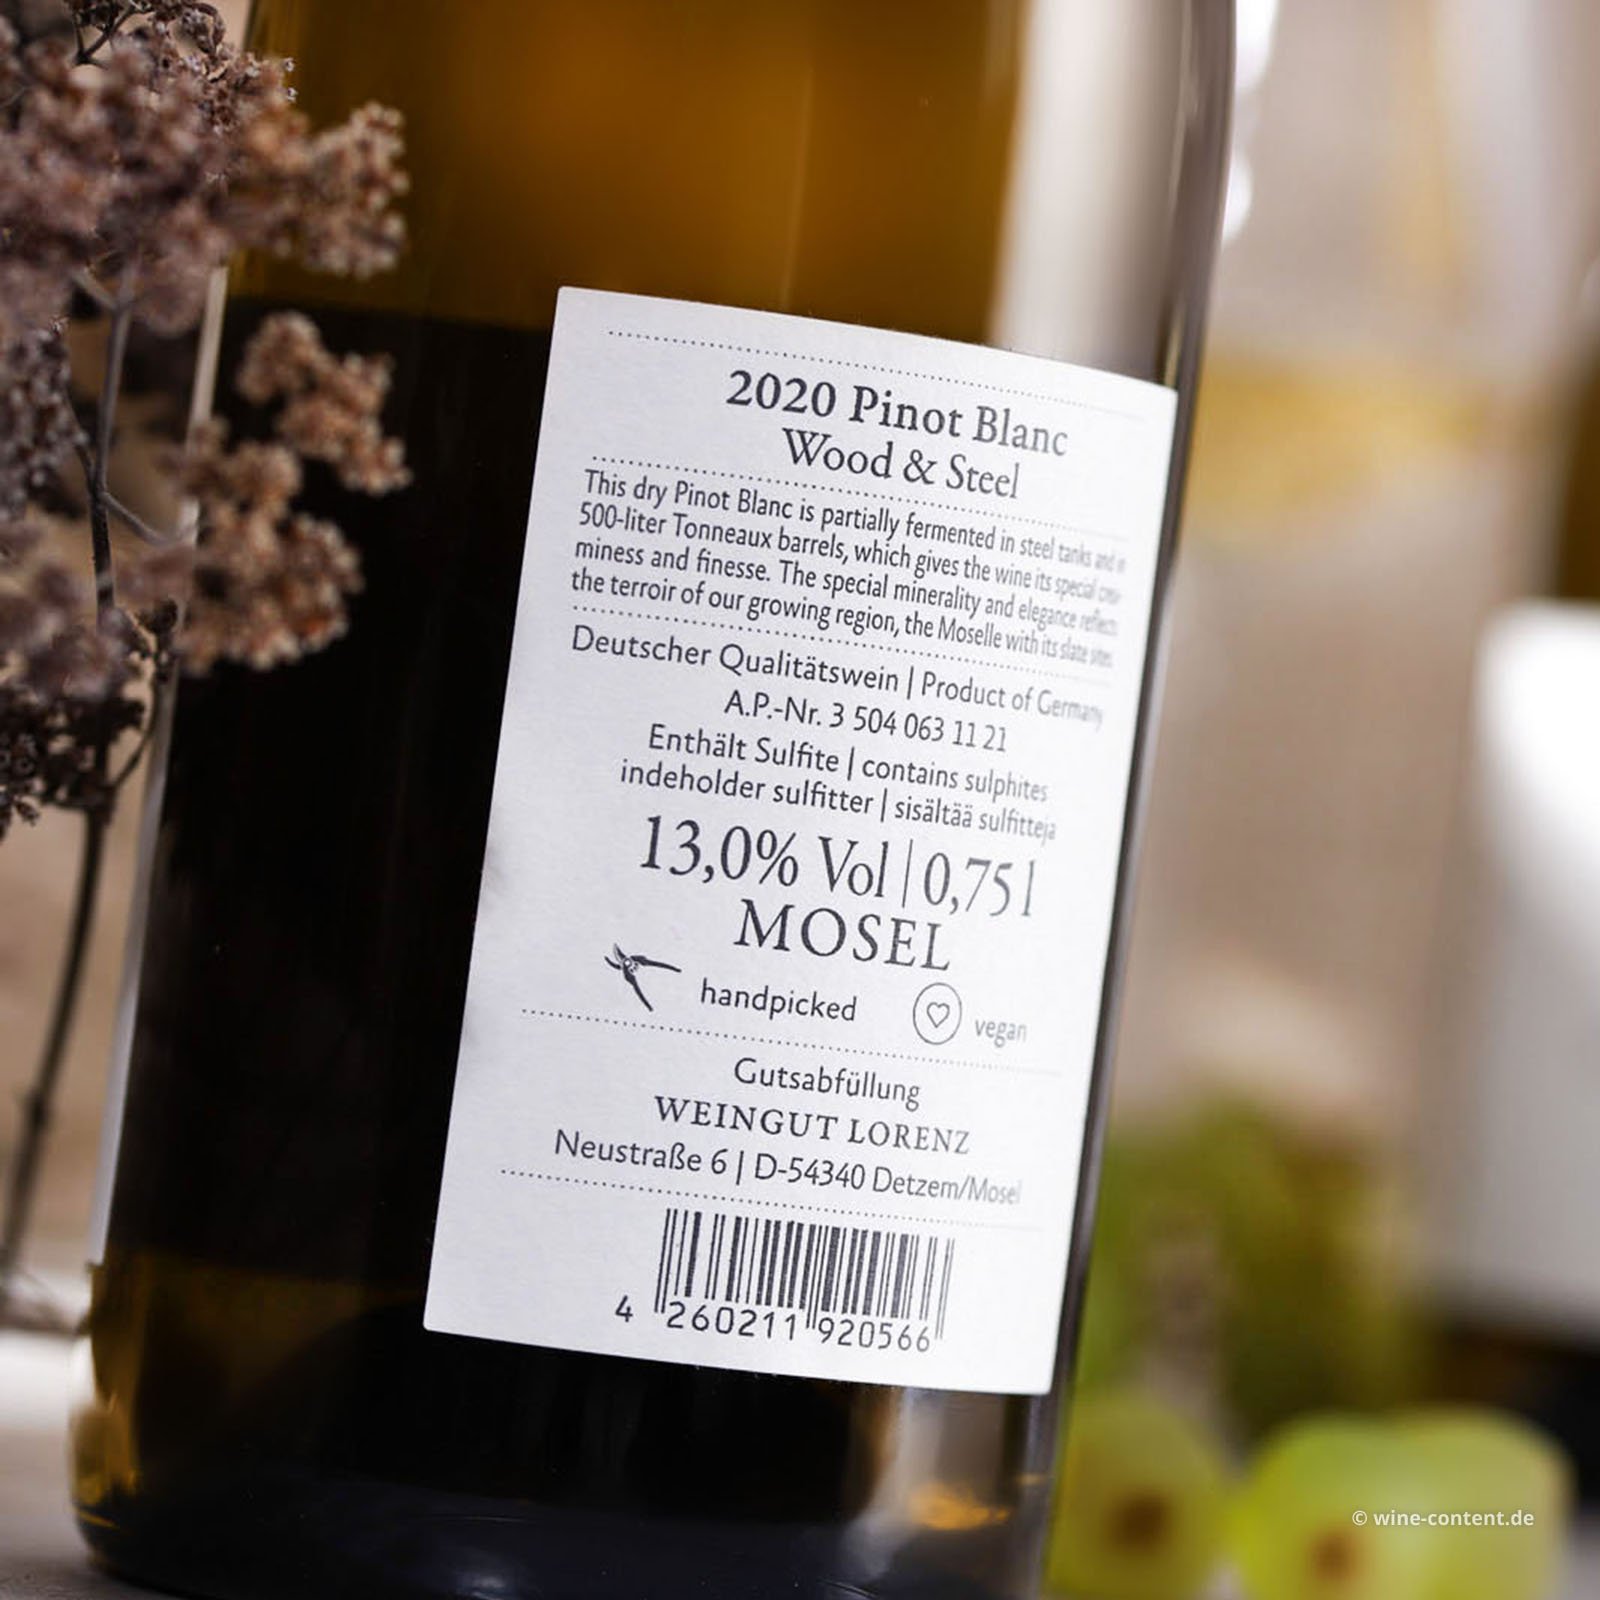 Pinot Blanc 2020 Wood & Steel